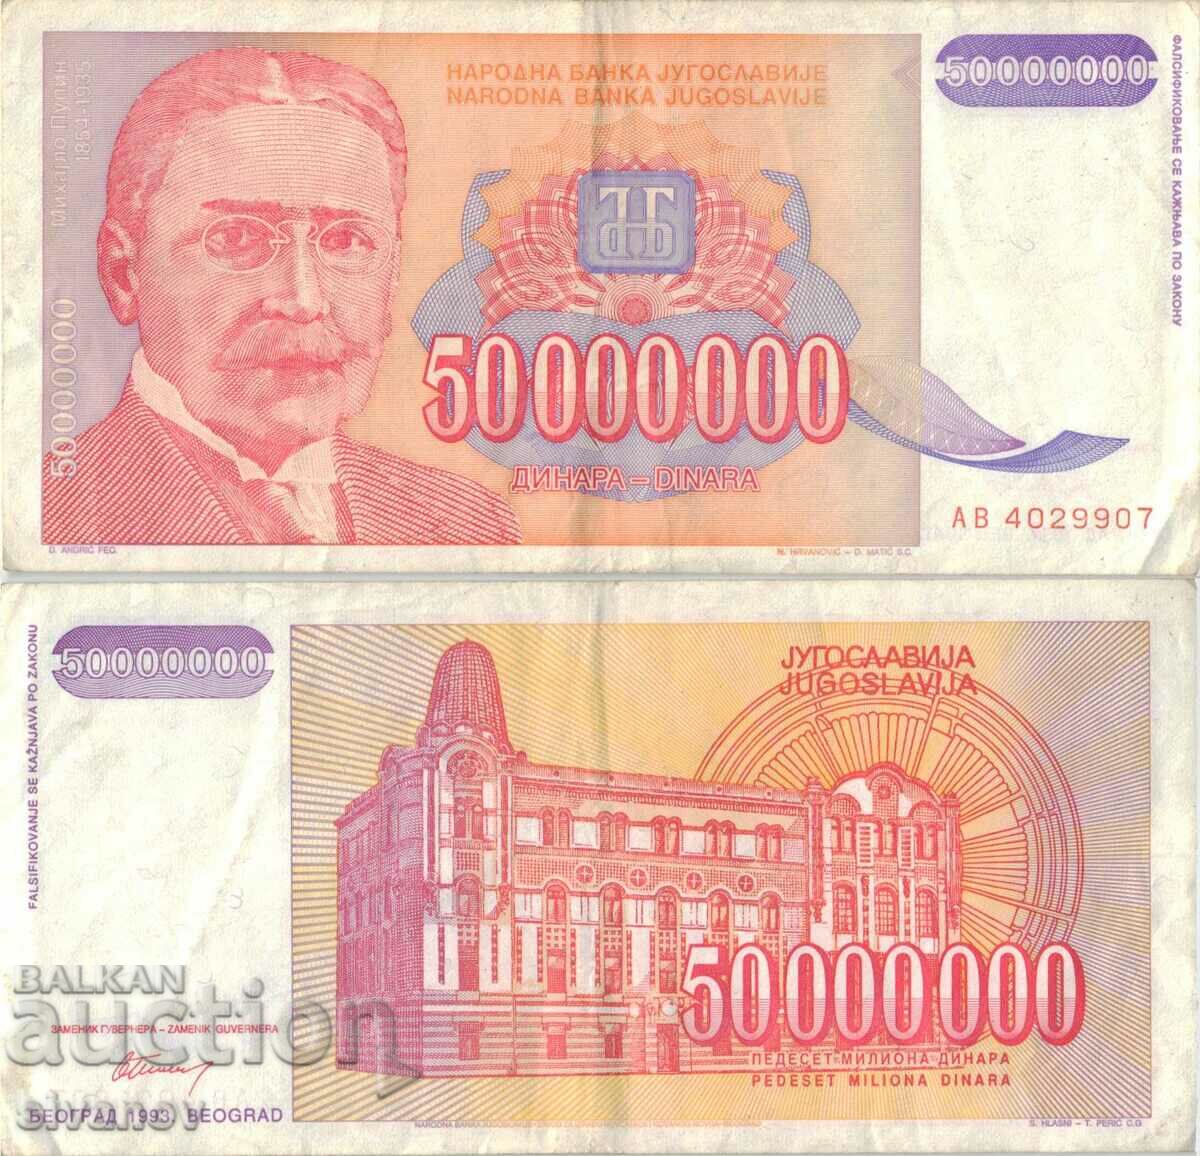 Югославия 50 000 000 динара 1993 година  #5069